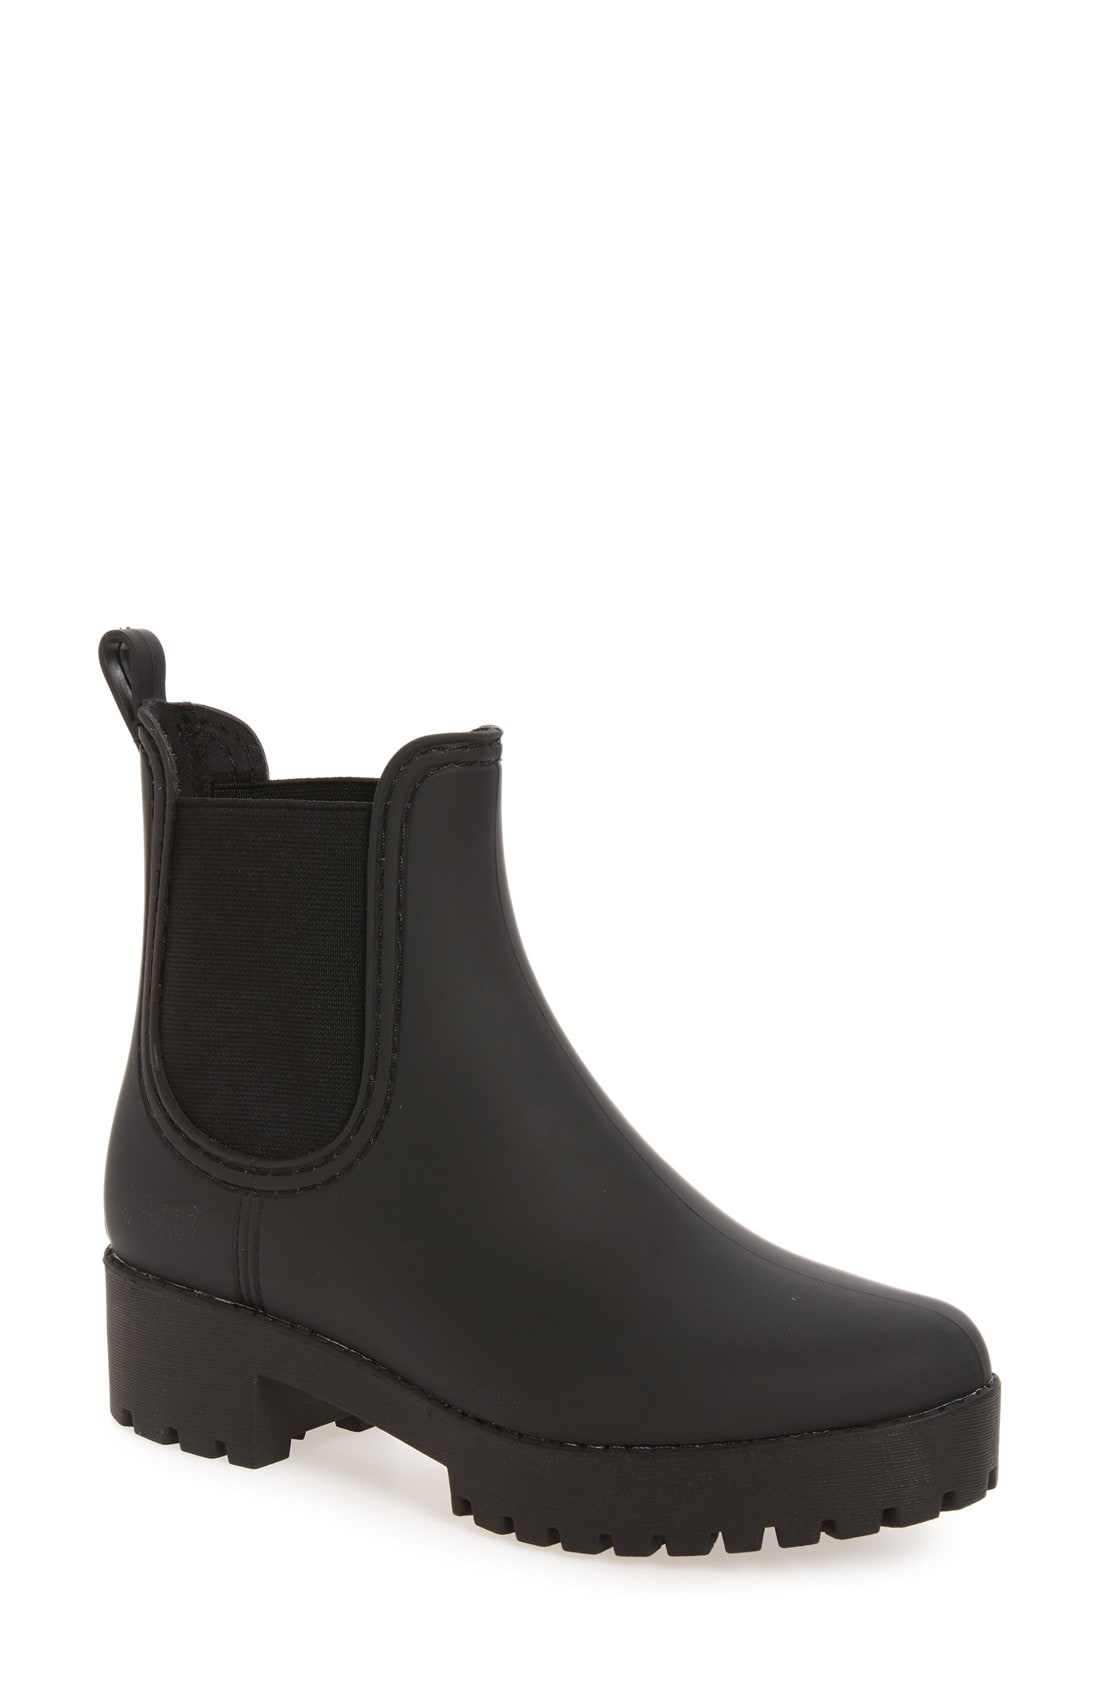 black ankle boots | Nordstrom